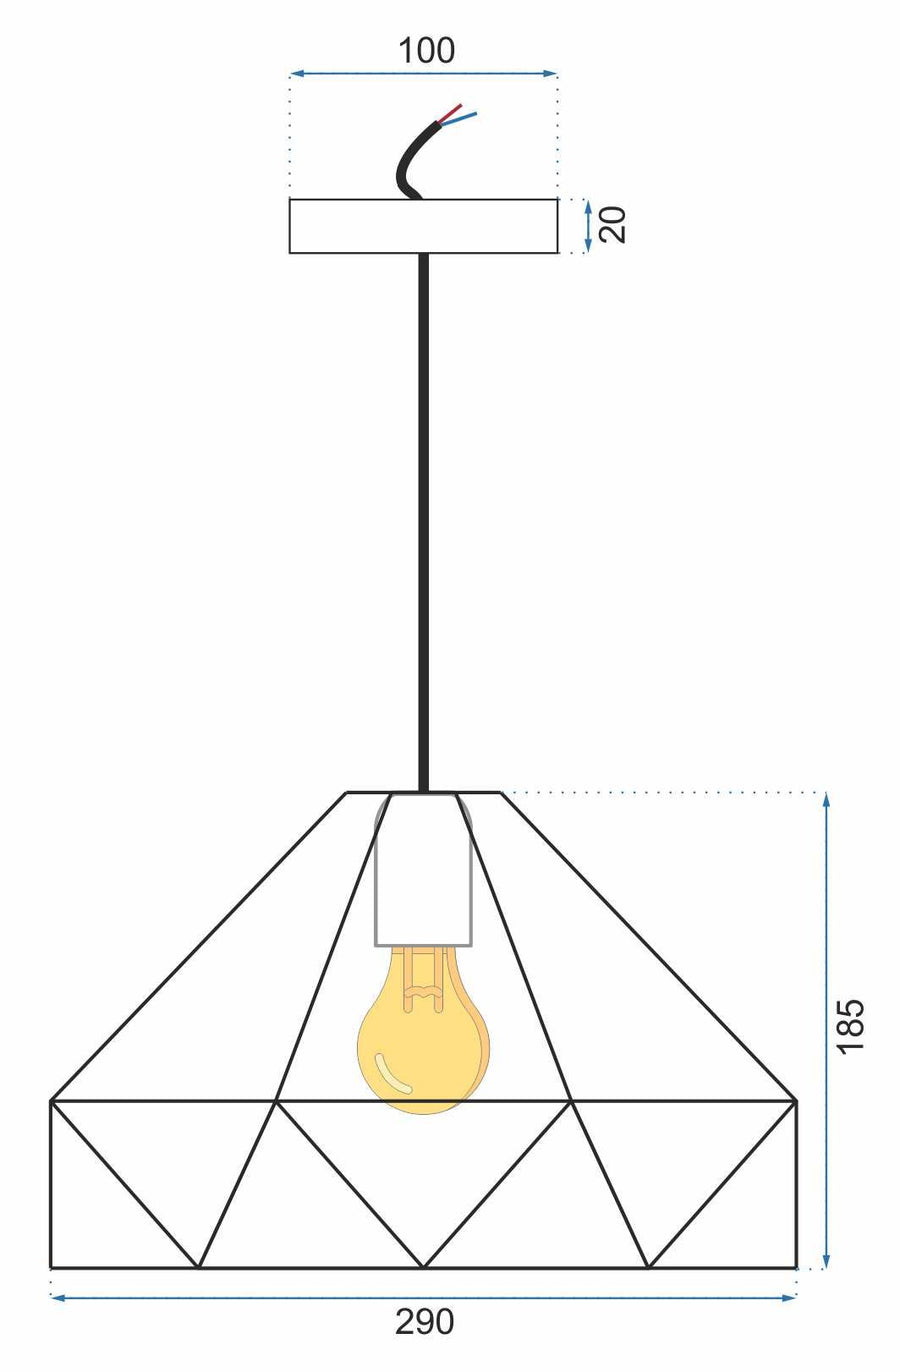 Lampa Sufitowa Wisząca APP236-1CP